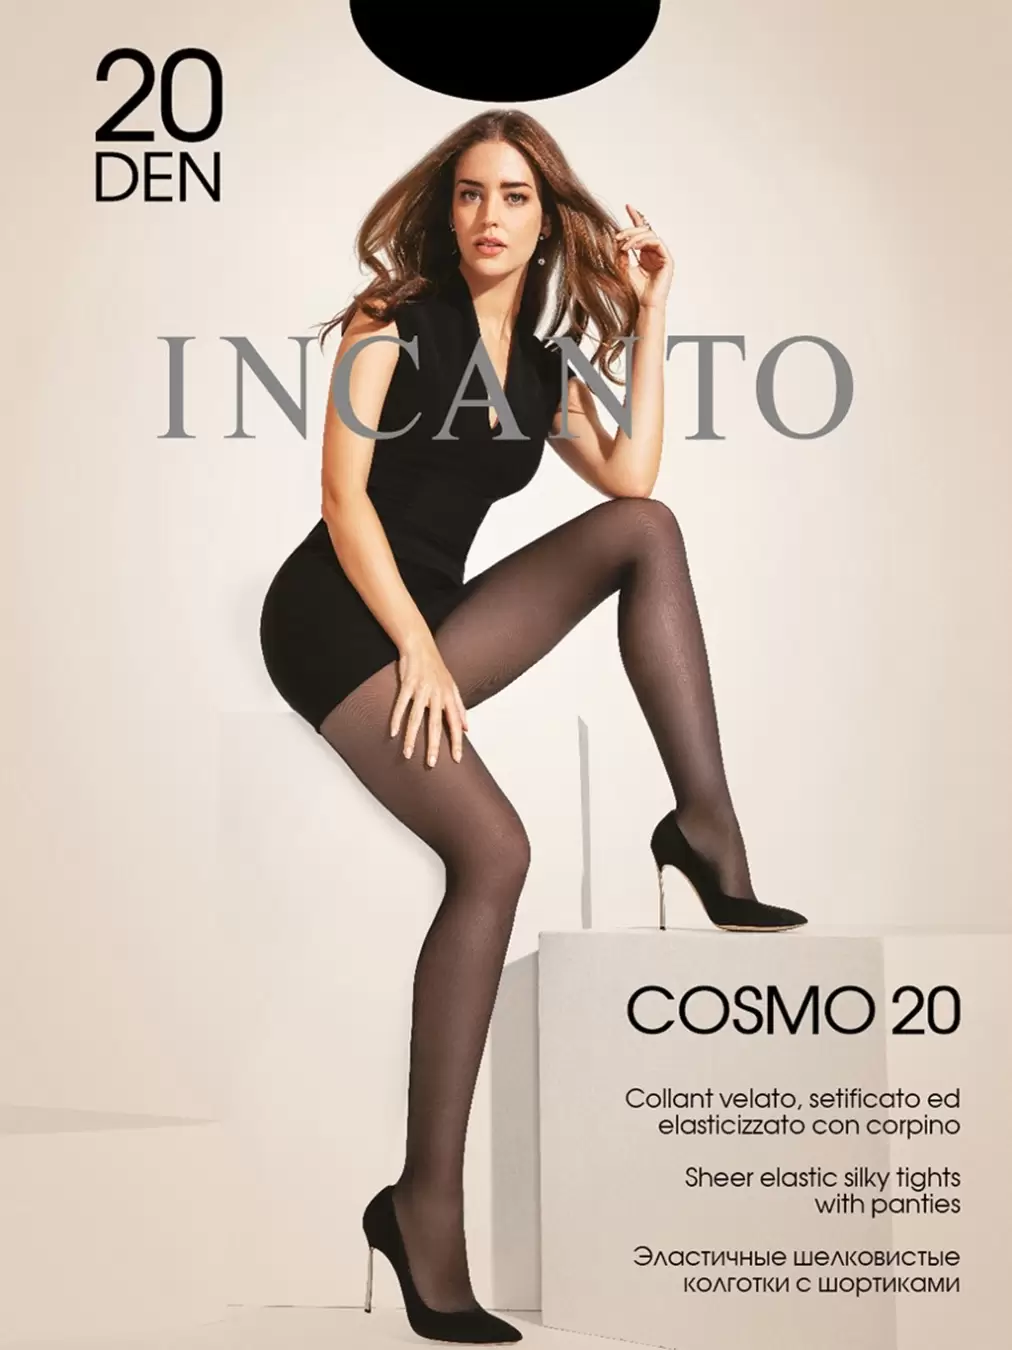 Incanto Cosmo 20, колготки (изображение 1)